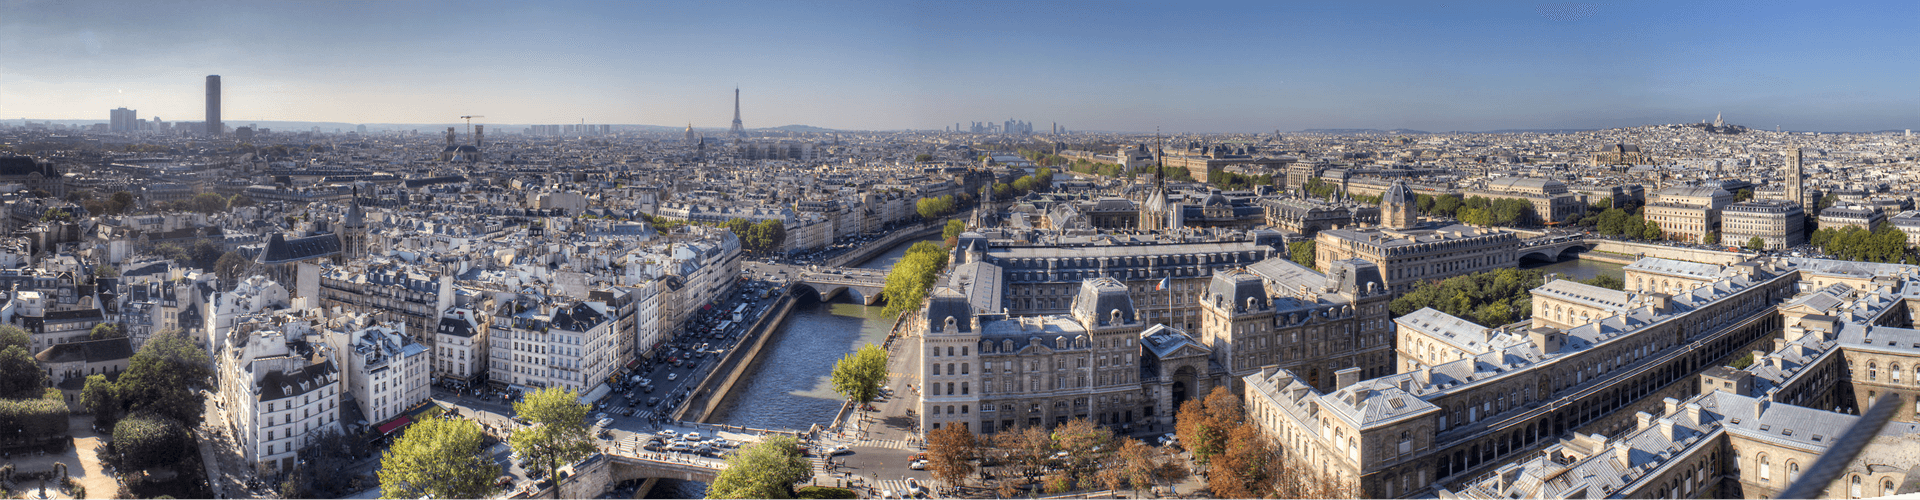 Parijs, de hoofdstad van Frankrijk